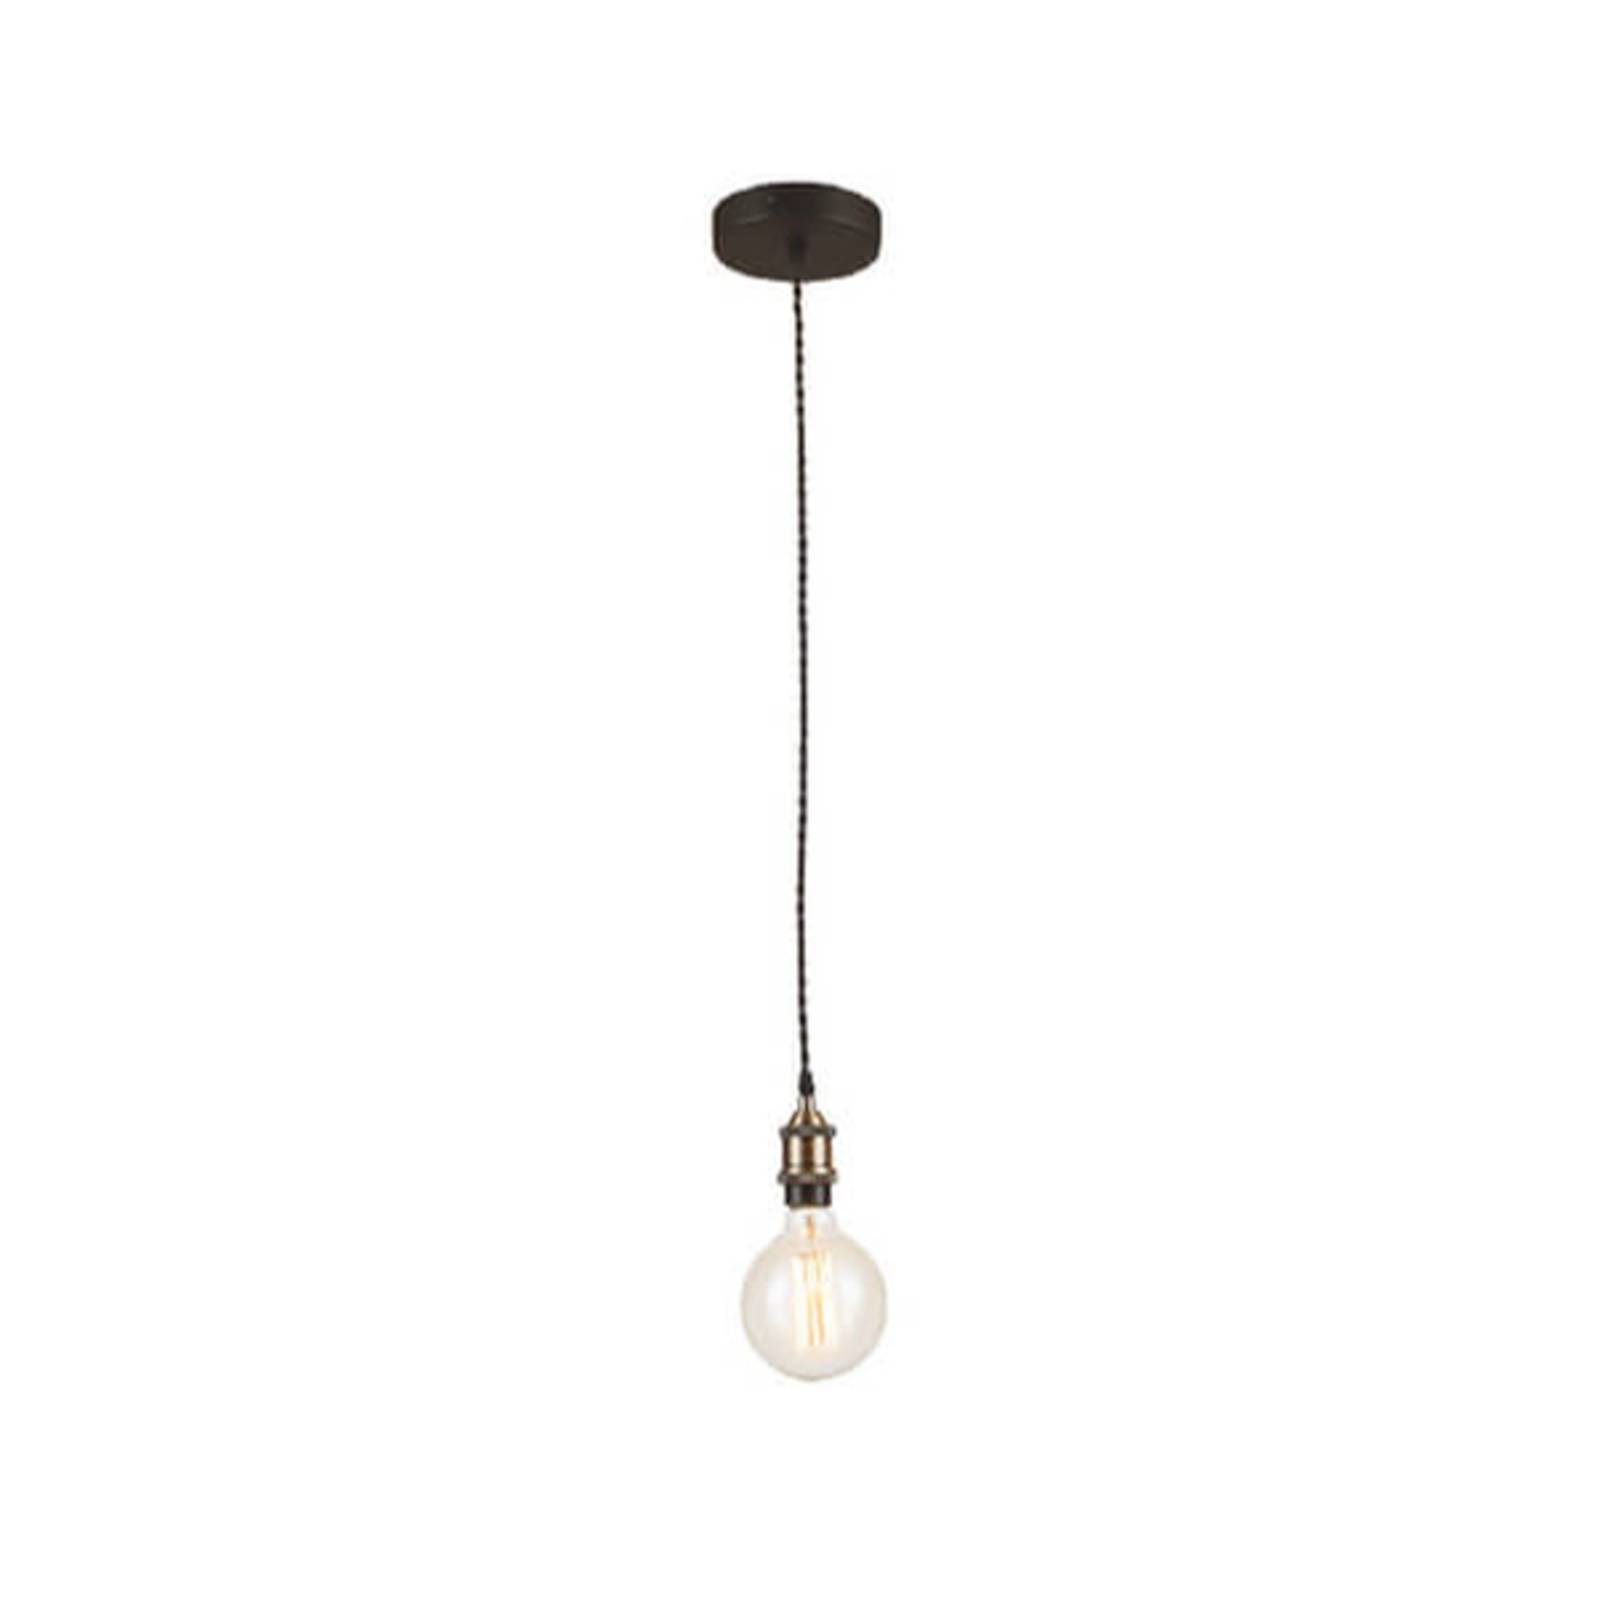 Eco-Light Lampada Vintage con sospensione a filo